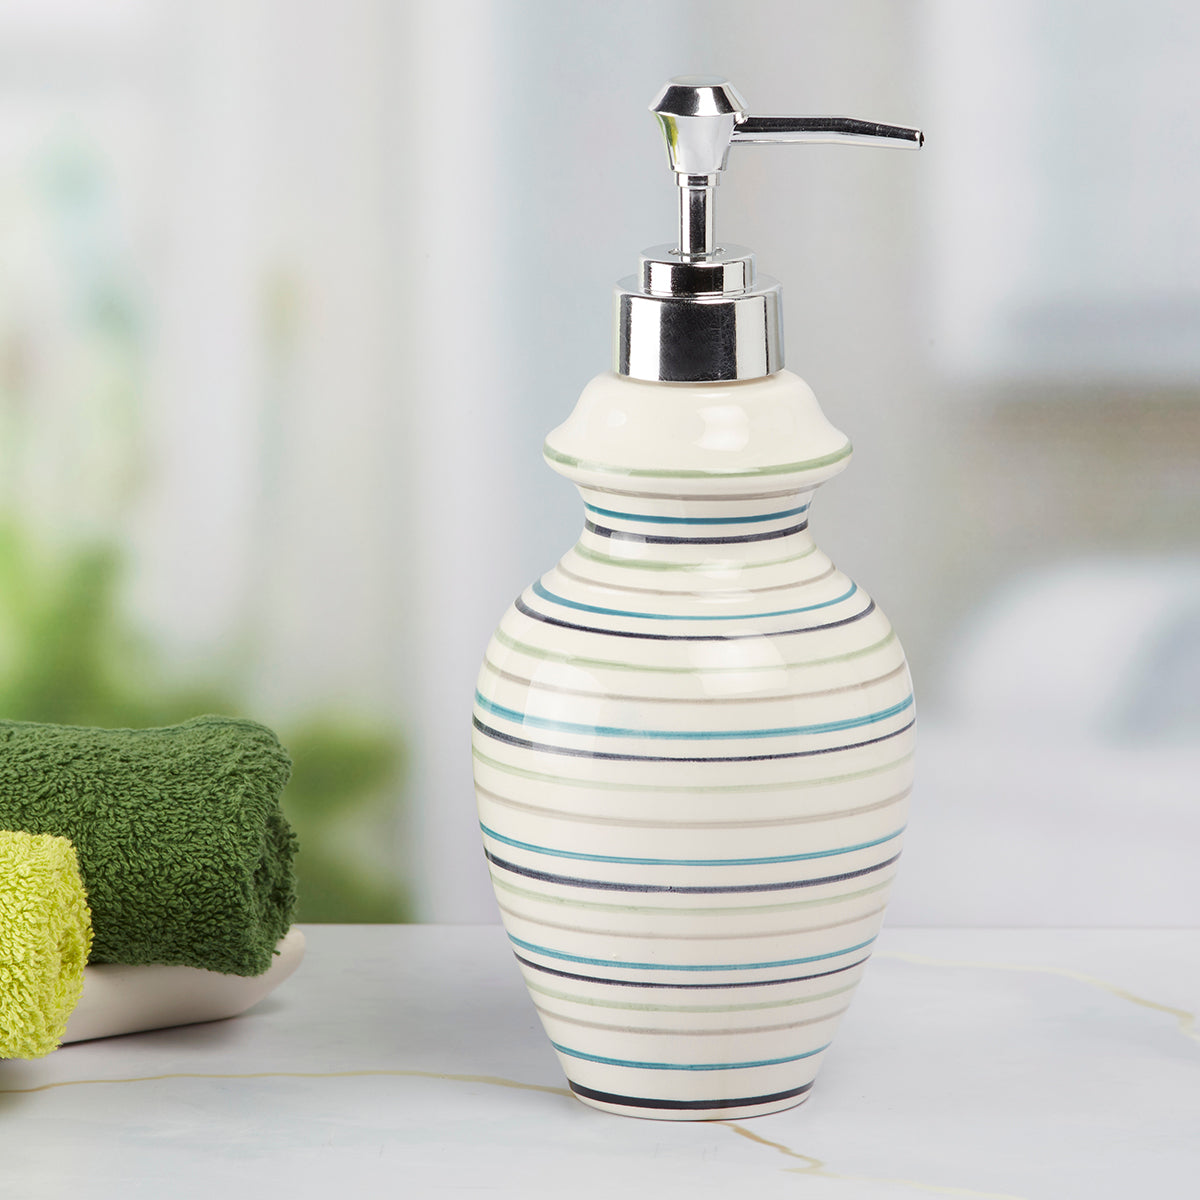 Ceramic Soap Dispenser handwash Pump for Bathroom, Set of 1, Red/brown (7640)